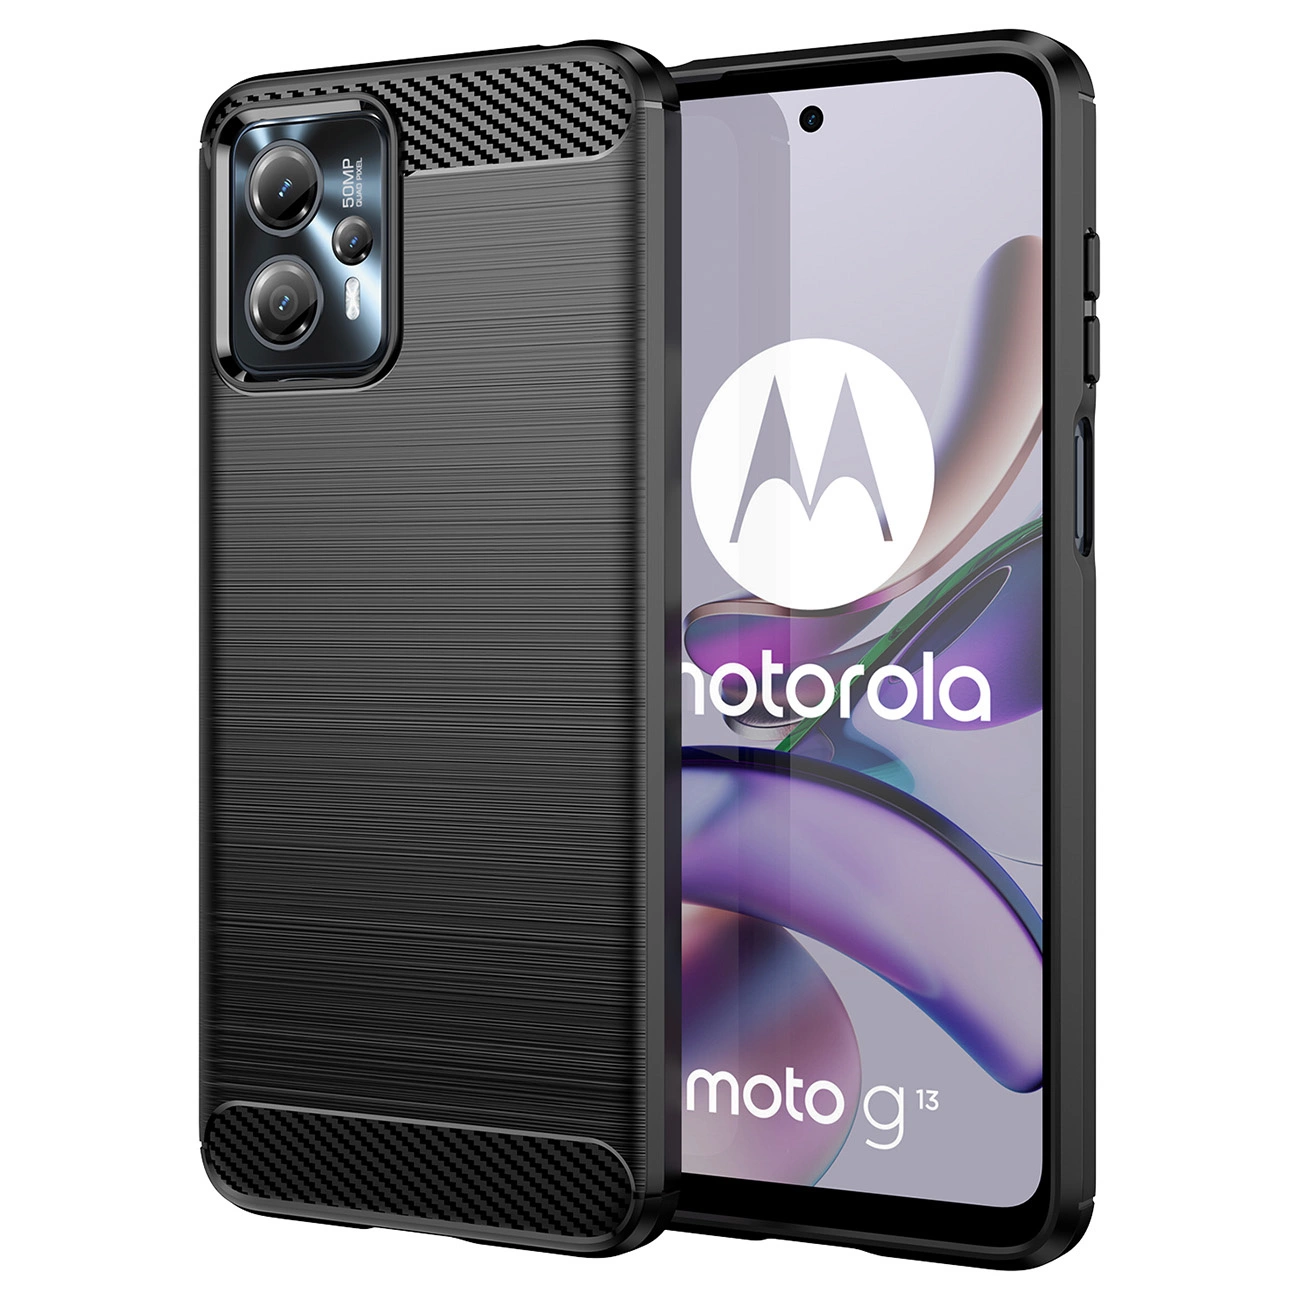 Hurtel Karbonové pouzdro pro Motorola Moto G53 / G13 flexibilní silikonové karbonové pouzdro černé